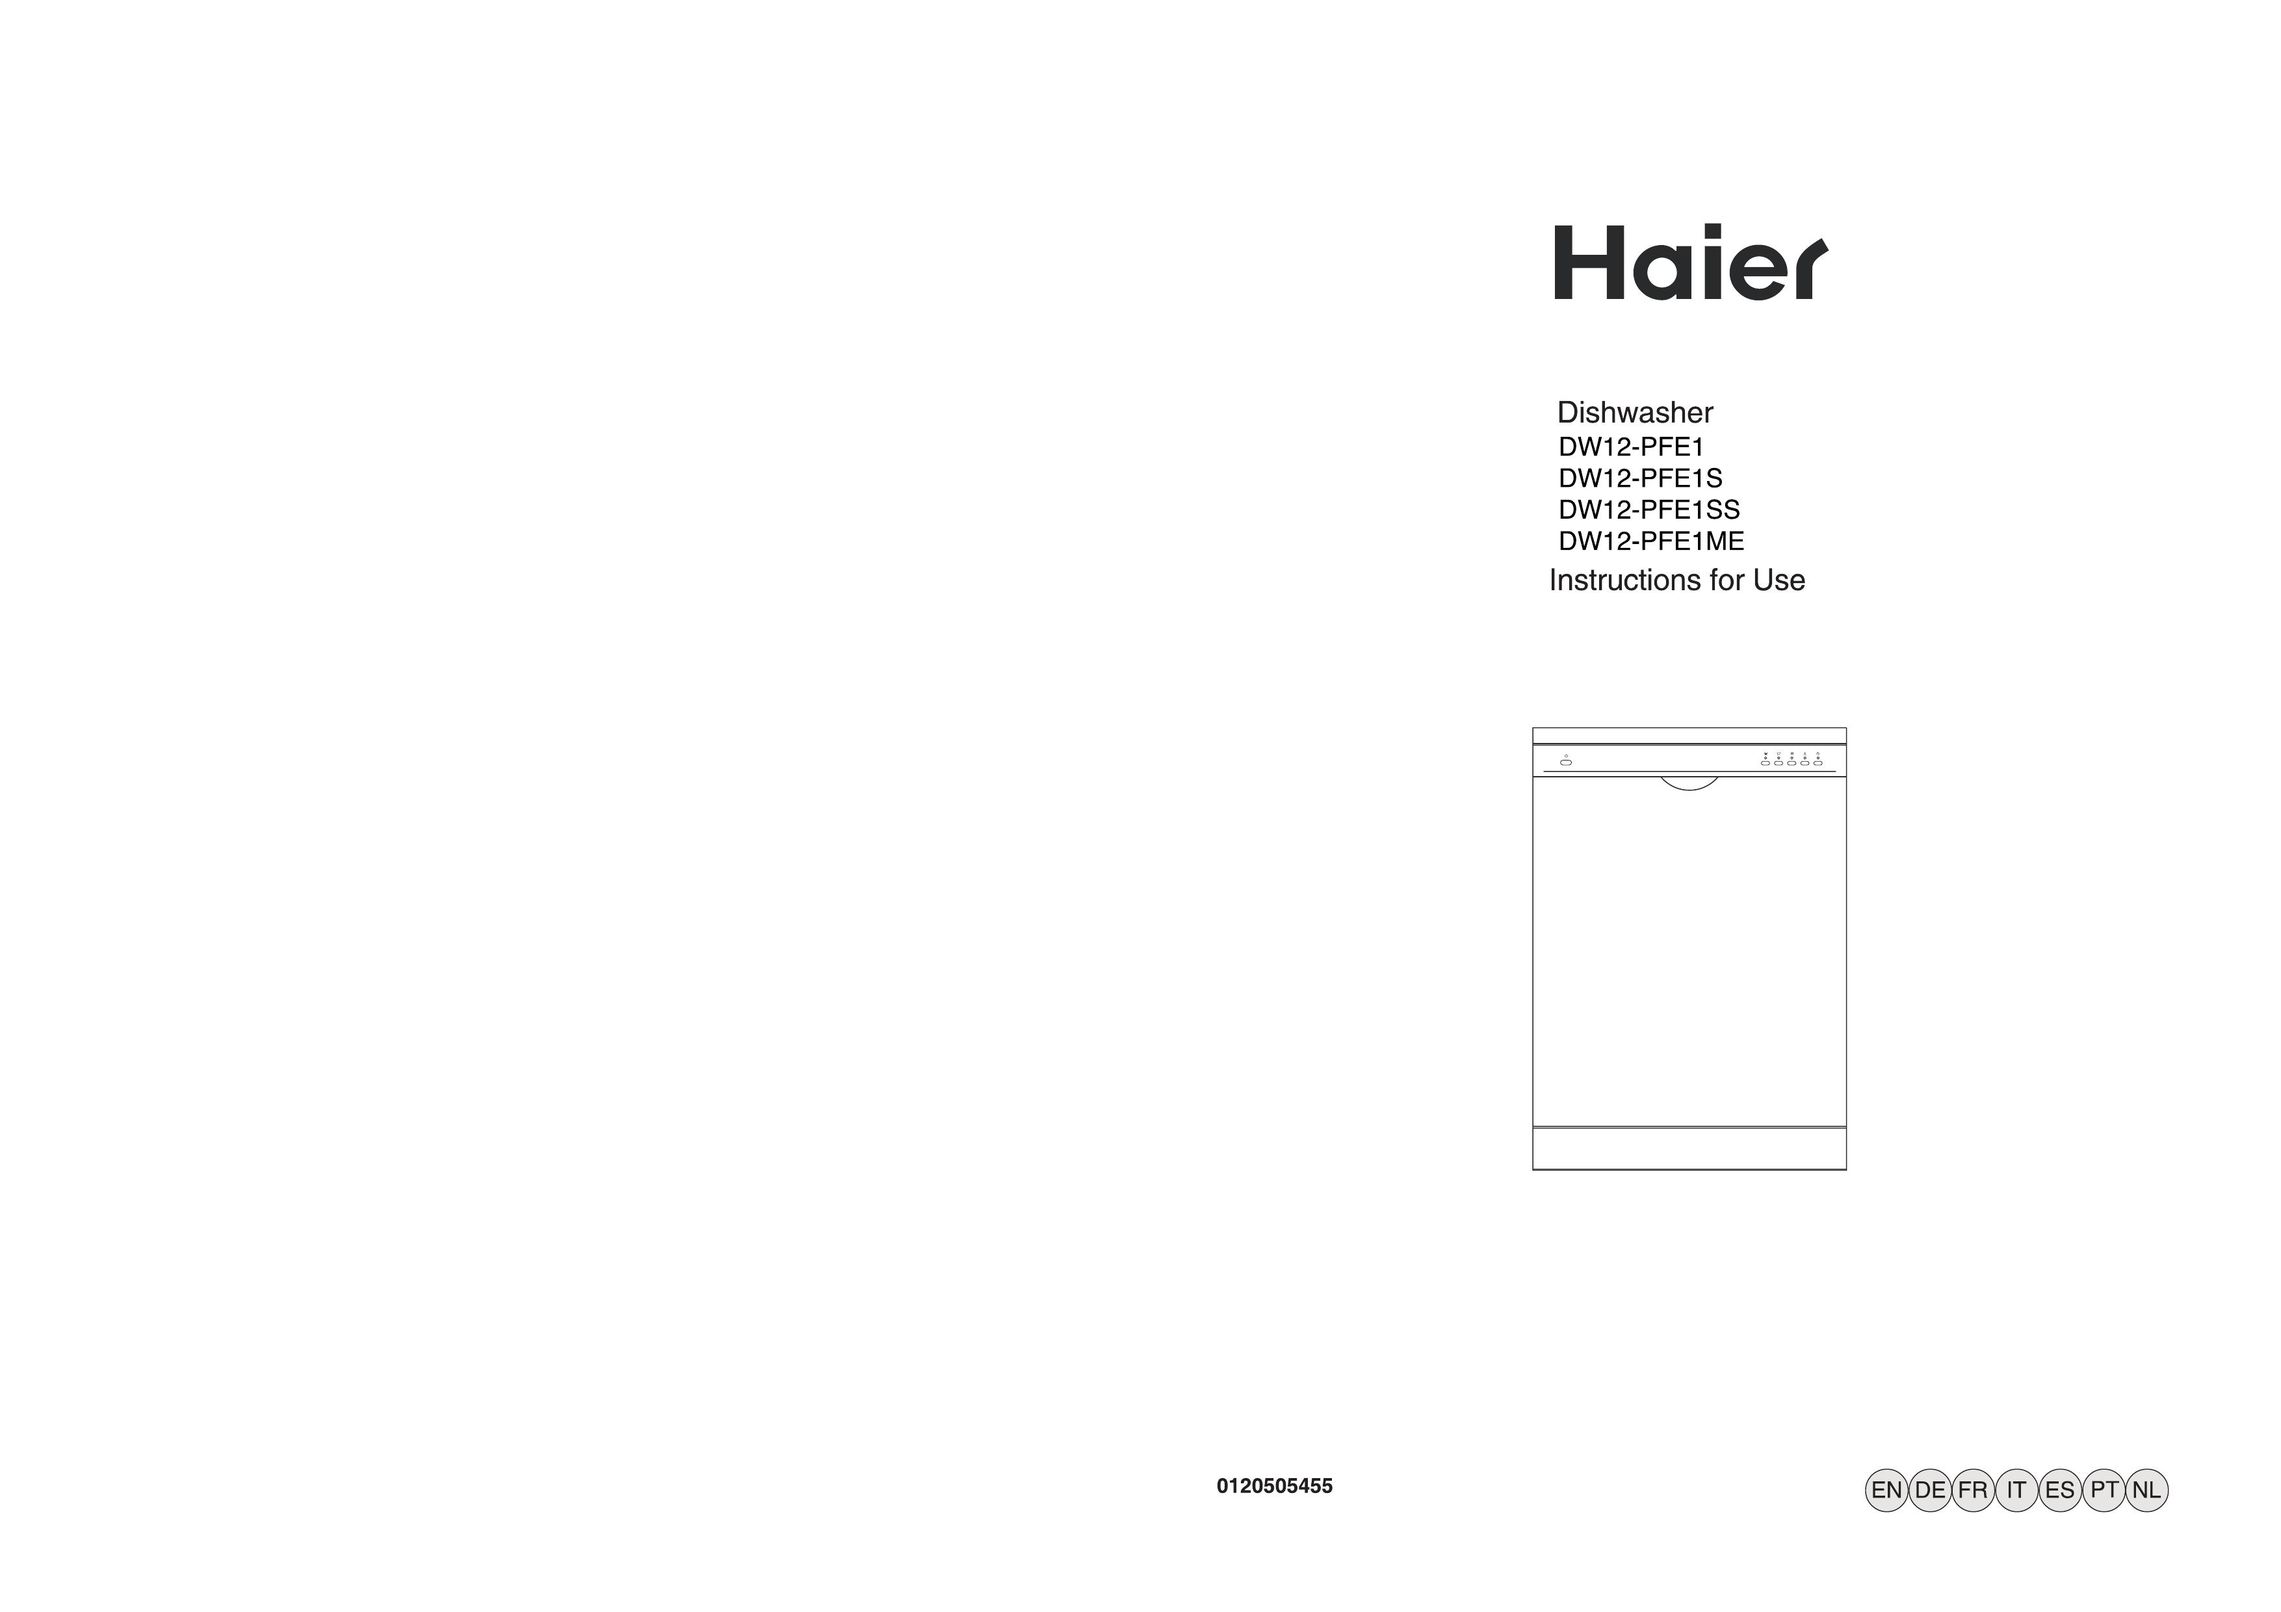 Haier DW12-PF1S Dishwasher User Manual